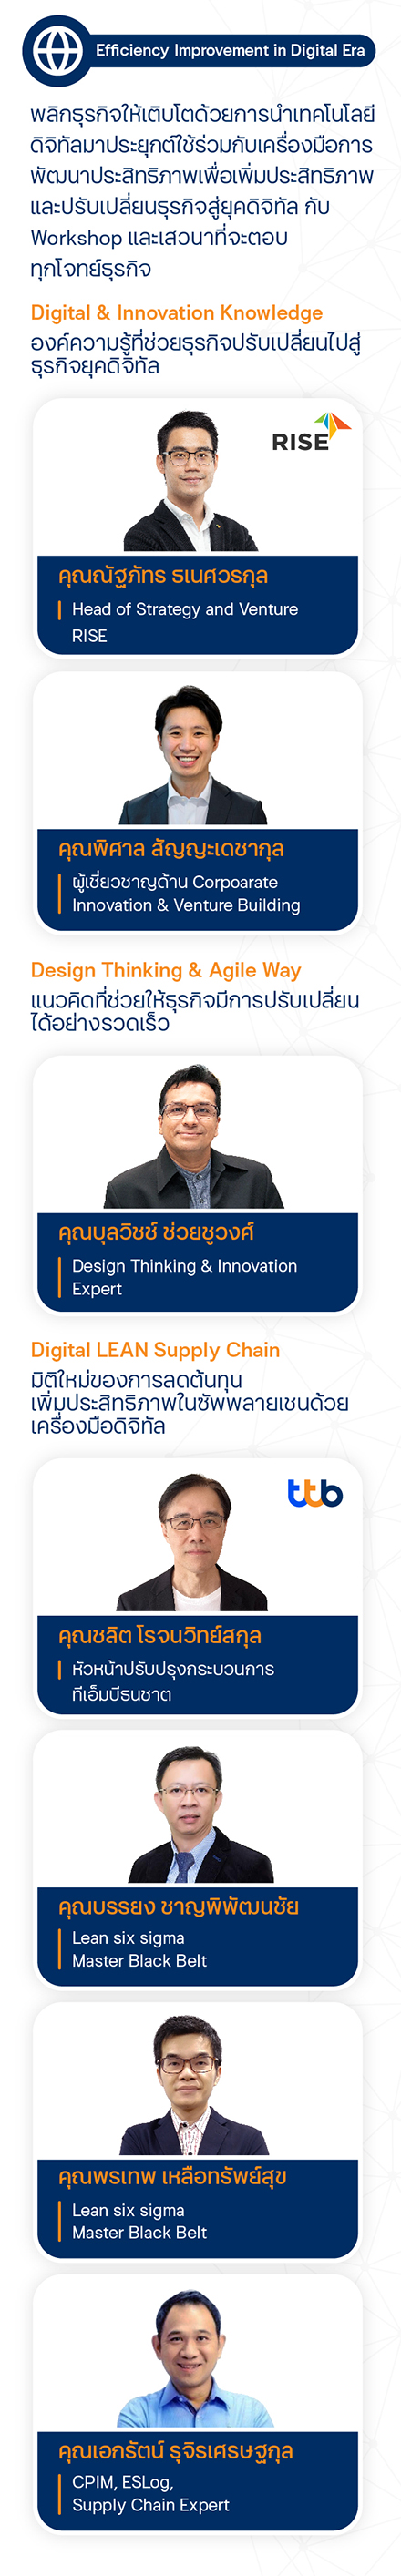 ttb digital LEAN supply chain รุ่น 17สำหรับอุตสาหกรรมอาหารและเครื่องดื่ม-สิ่งที่ผู้เข้ารับอบรมจะได้รับ-วิทยากร2